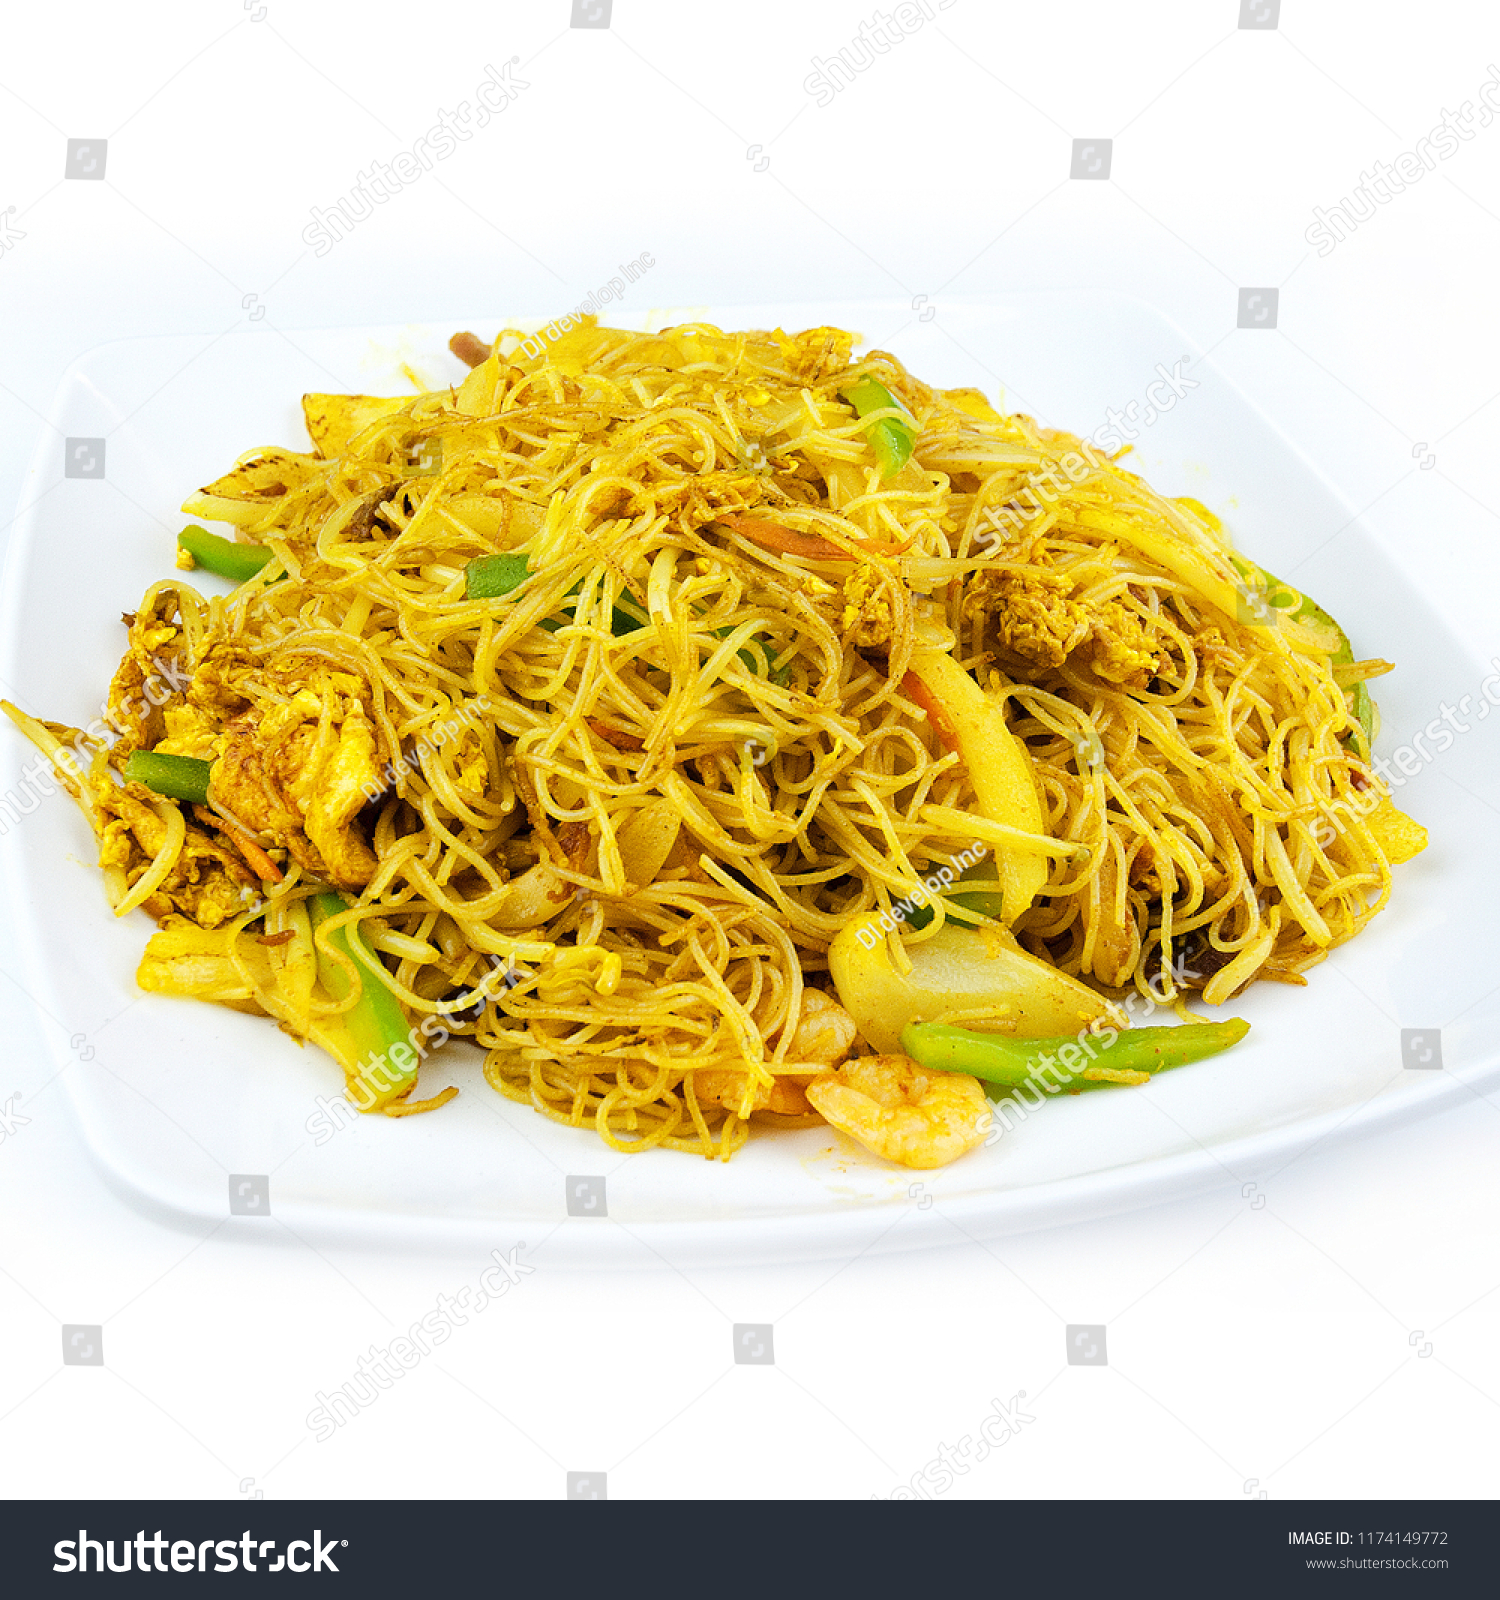 Singapure Style Fried Rice Vermiceli #1174149772